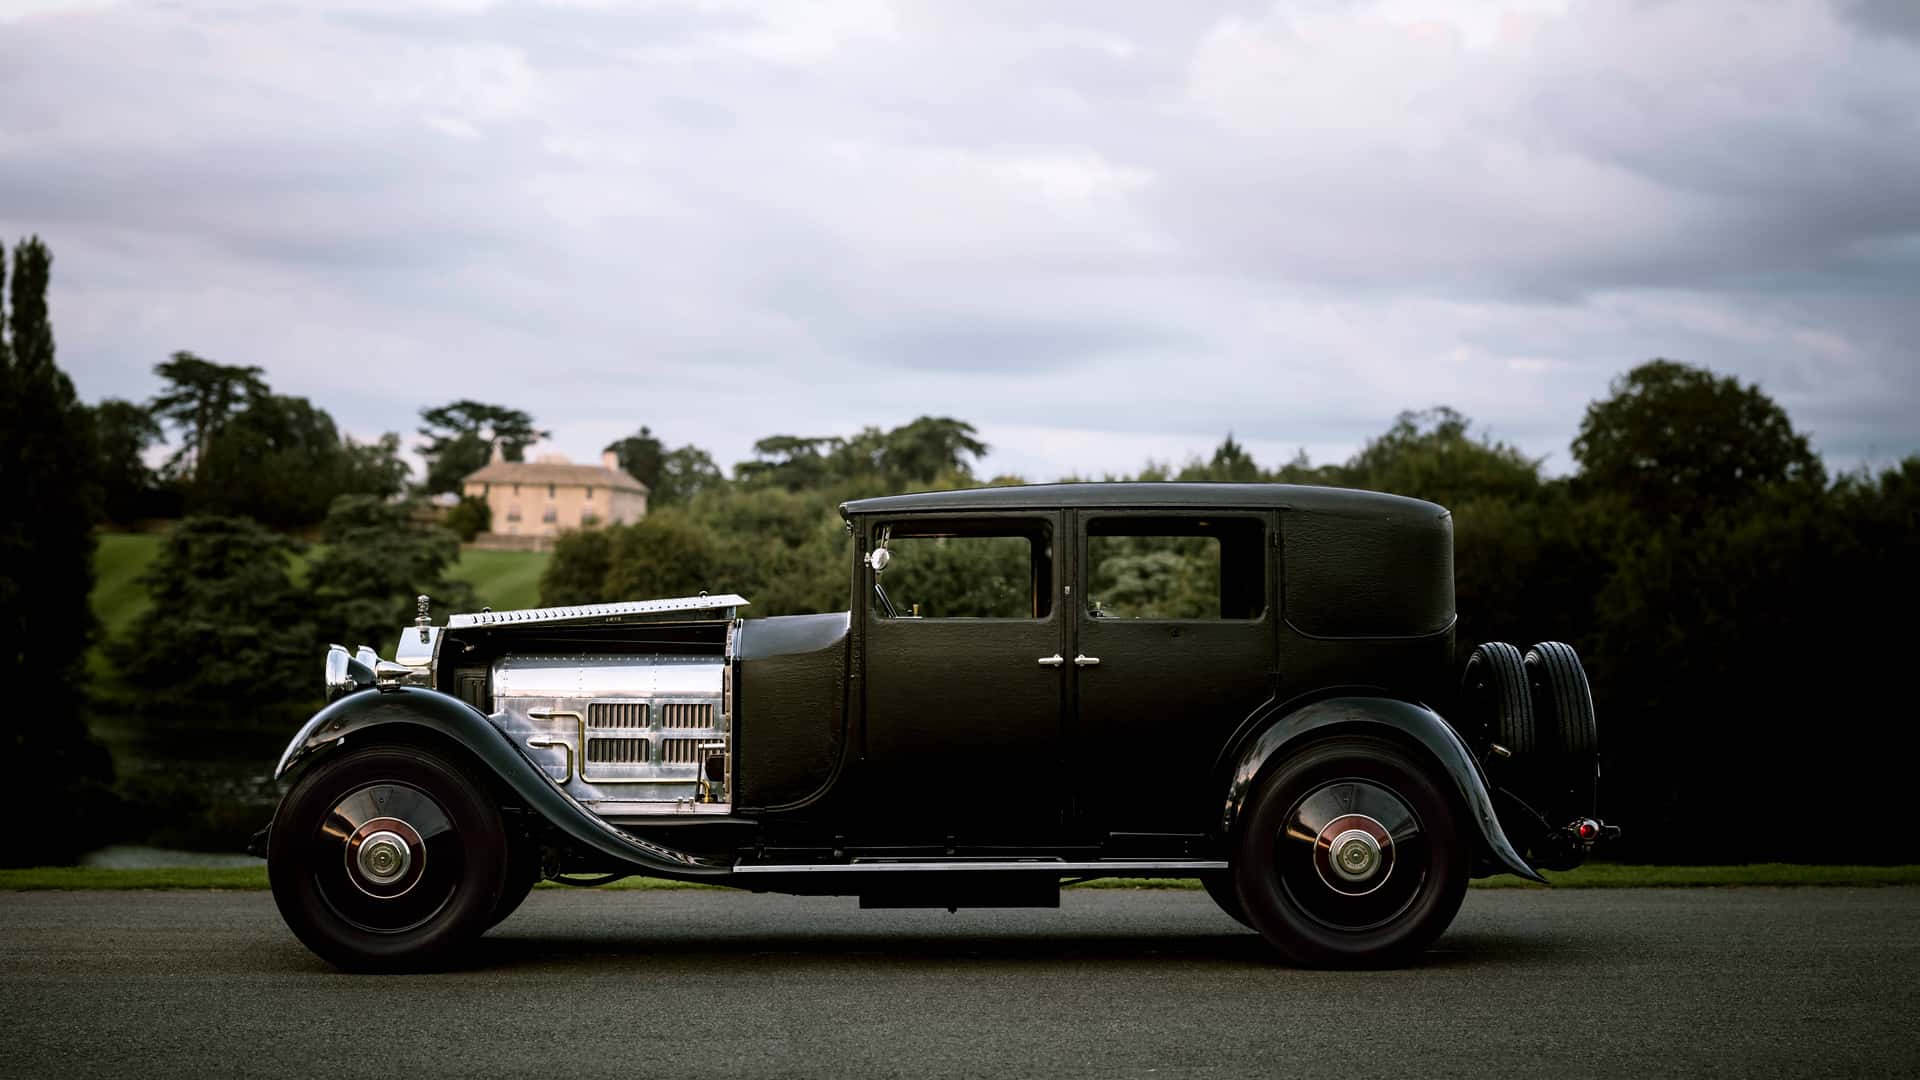 1929 rolls-royce phantom ii ev conversion by electrogenic revealed with 201 hp